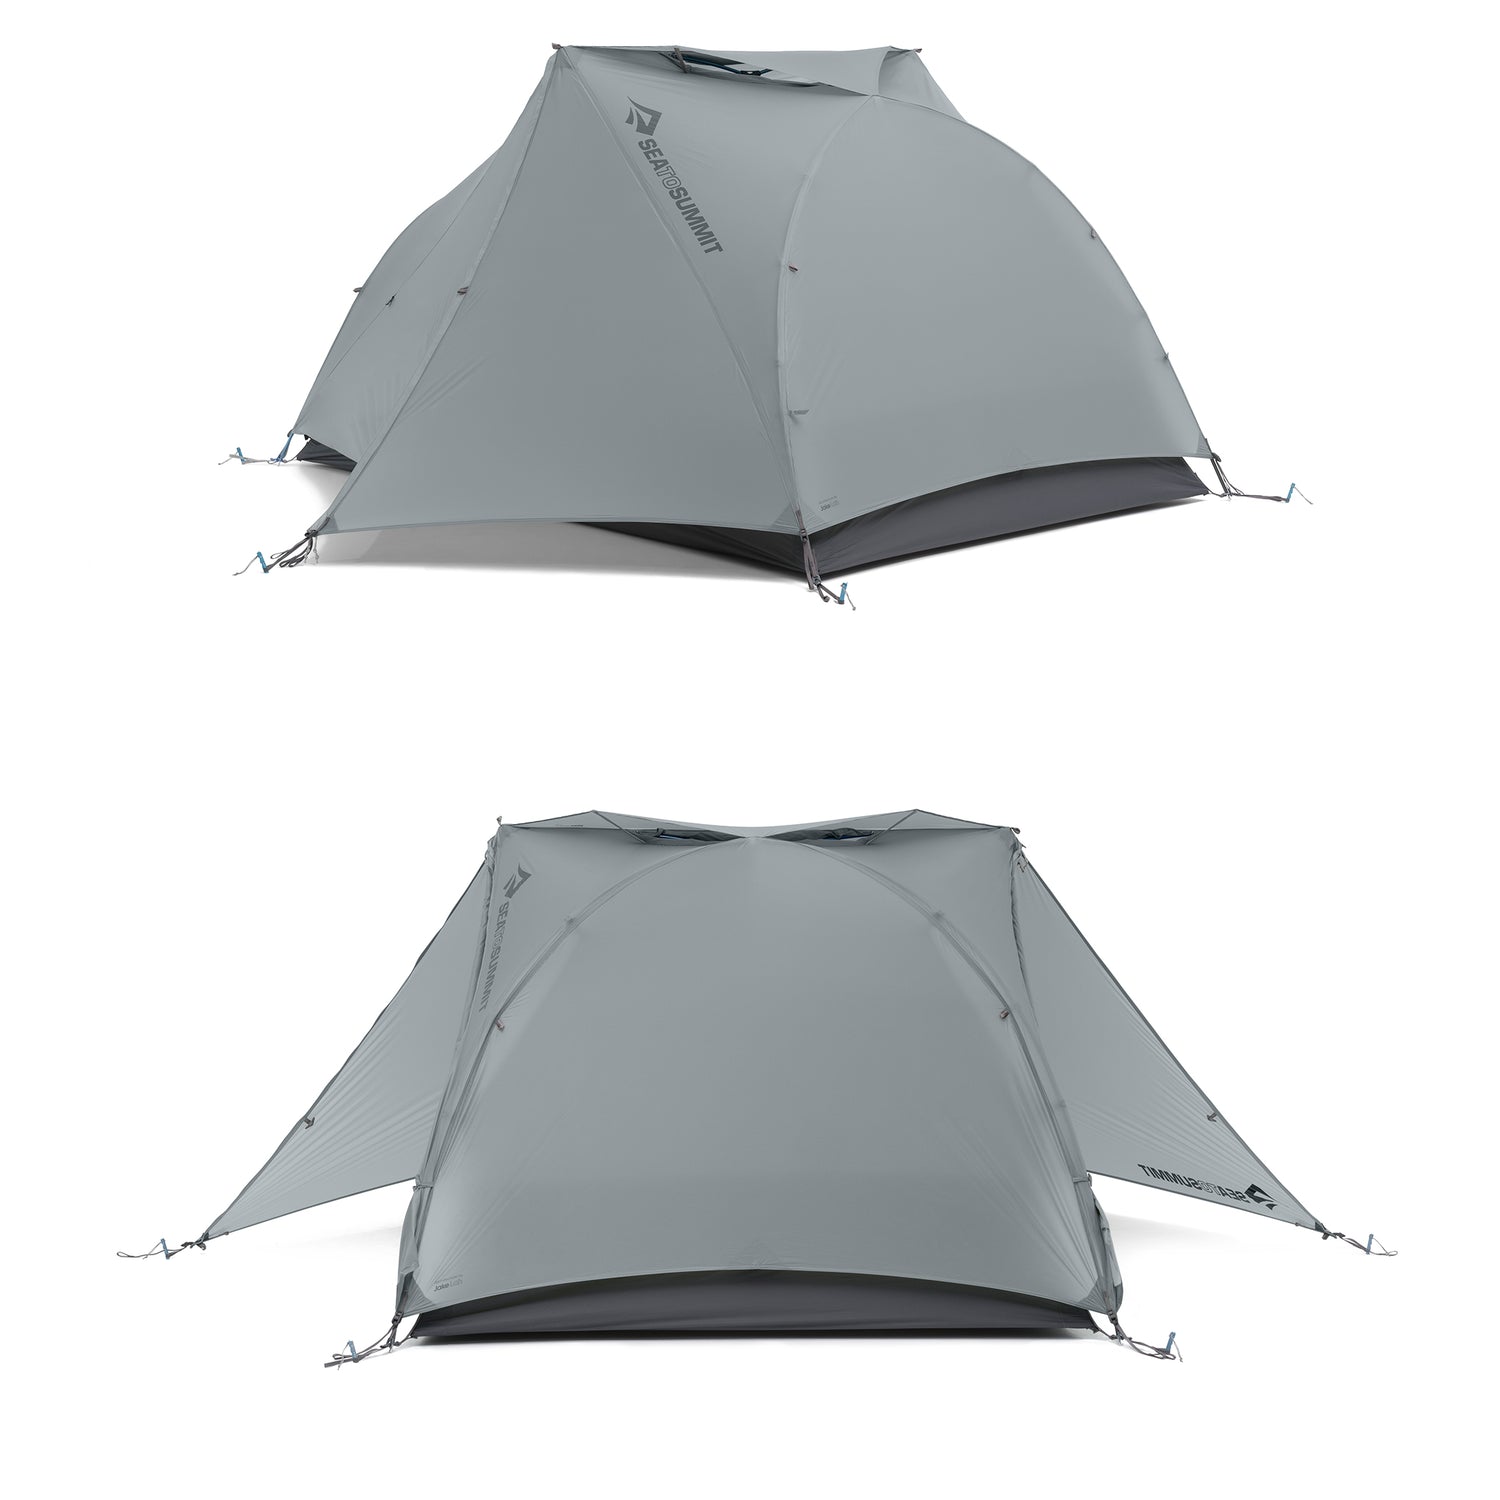 Telos Freestanding Ultralight Tent